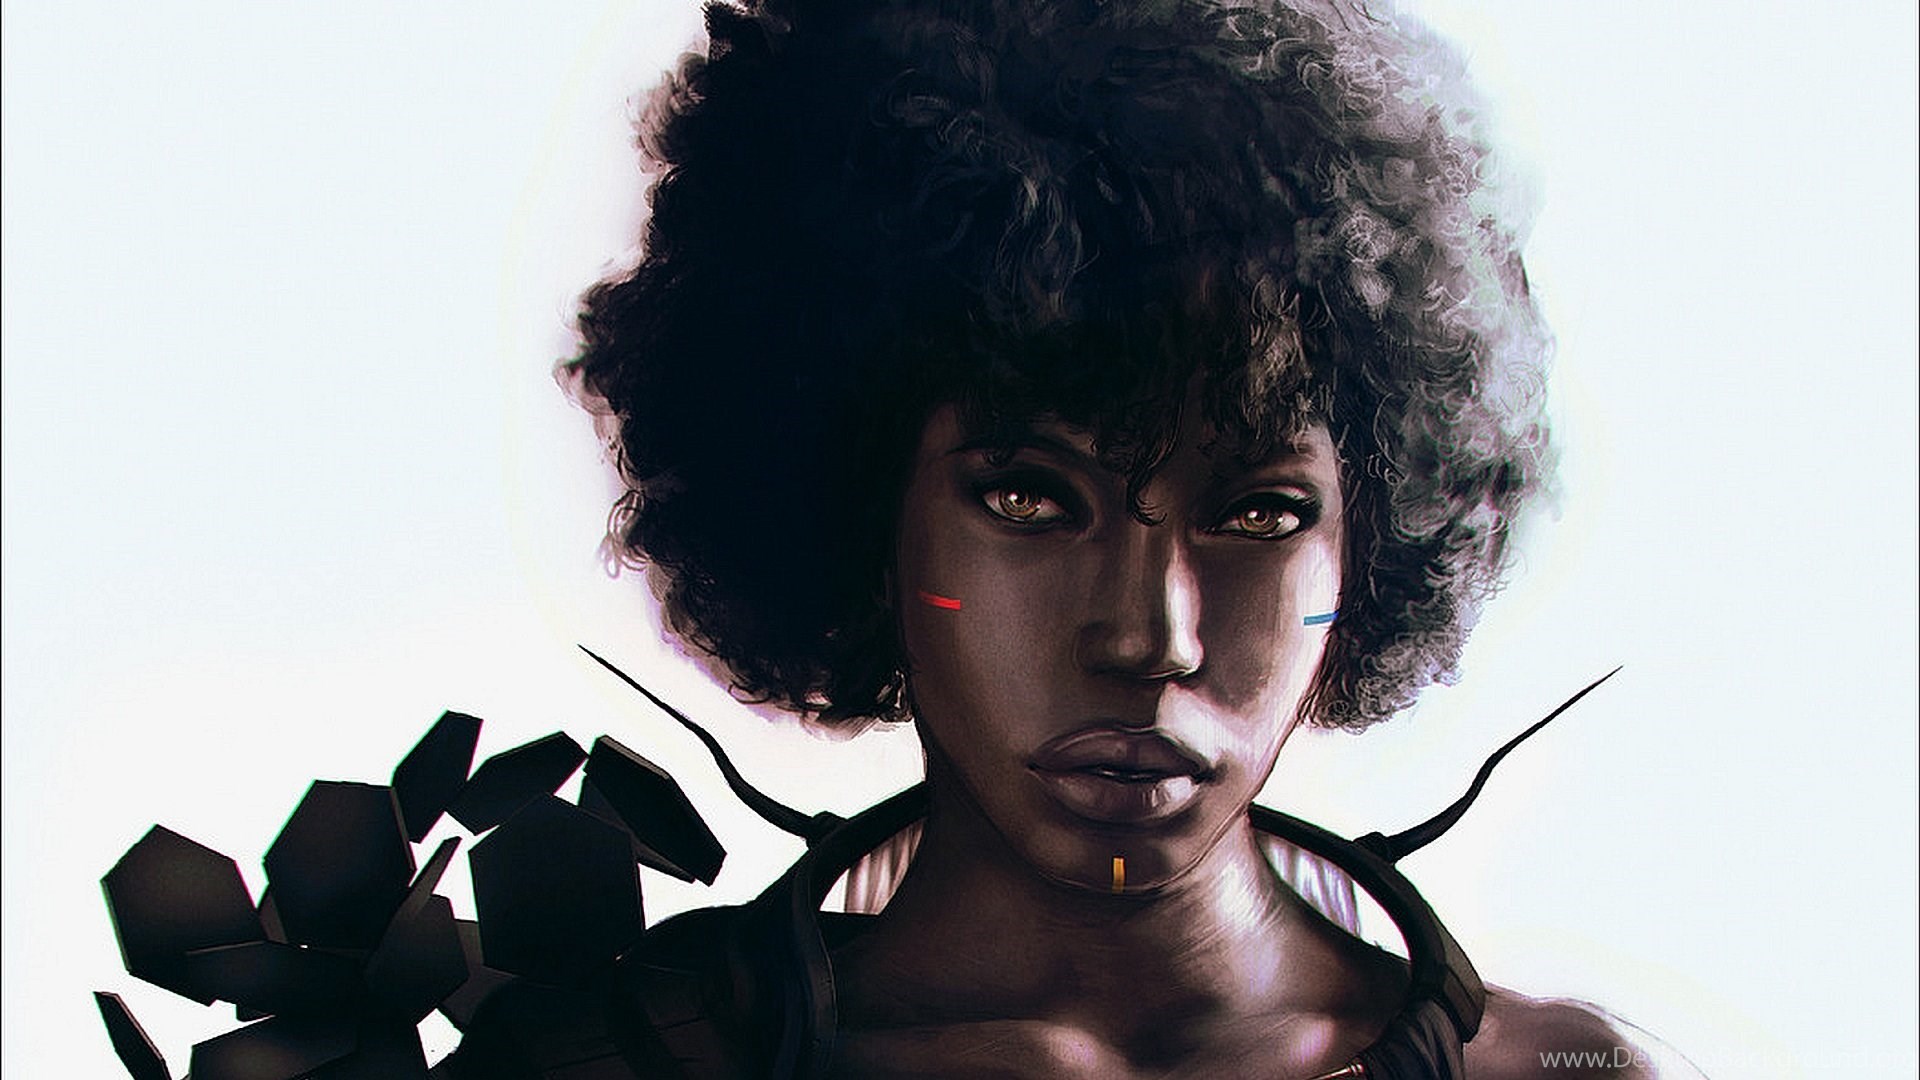 Wallpaper: Fantasy, Black Woman, Female, Short Hair, Wallpaper Desktop Background